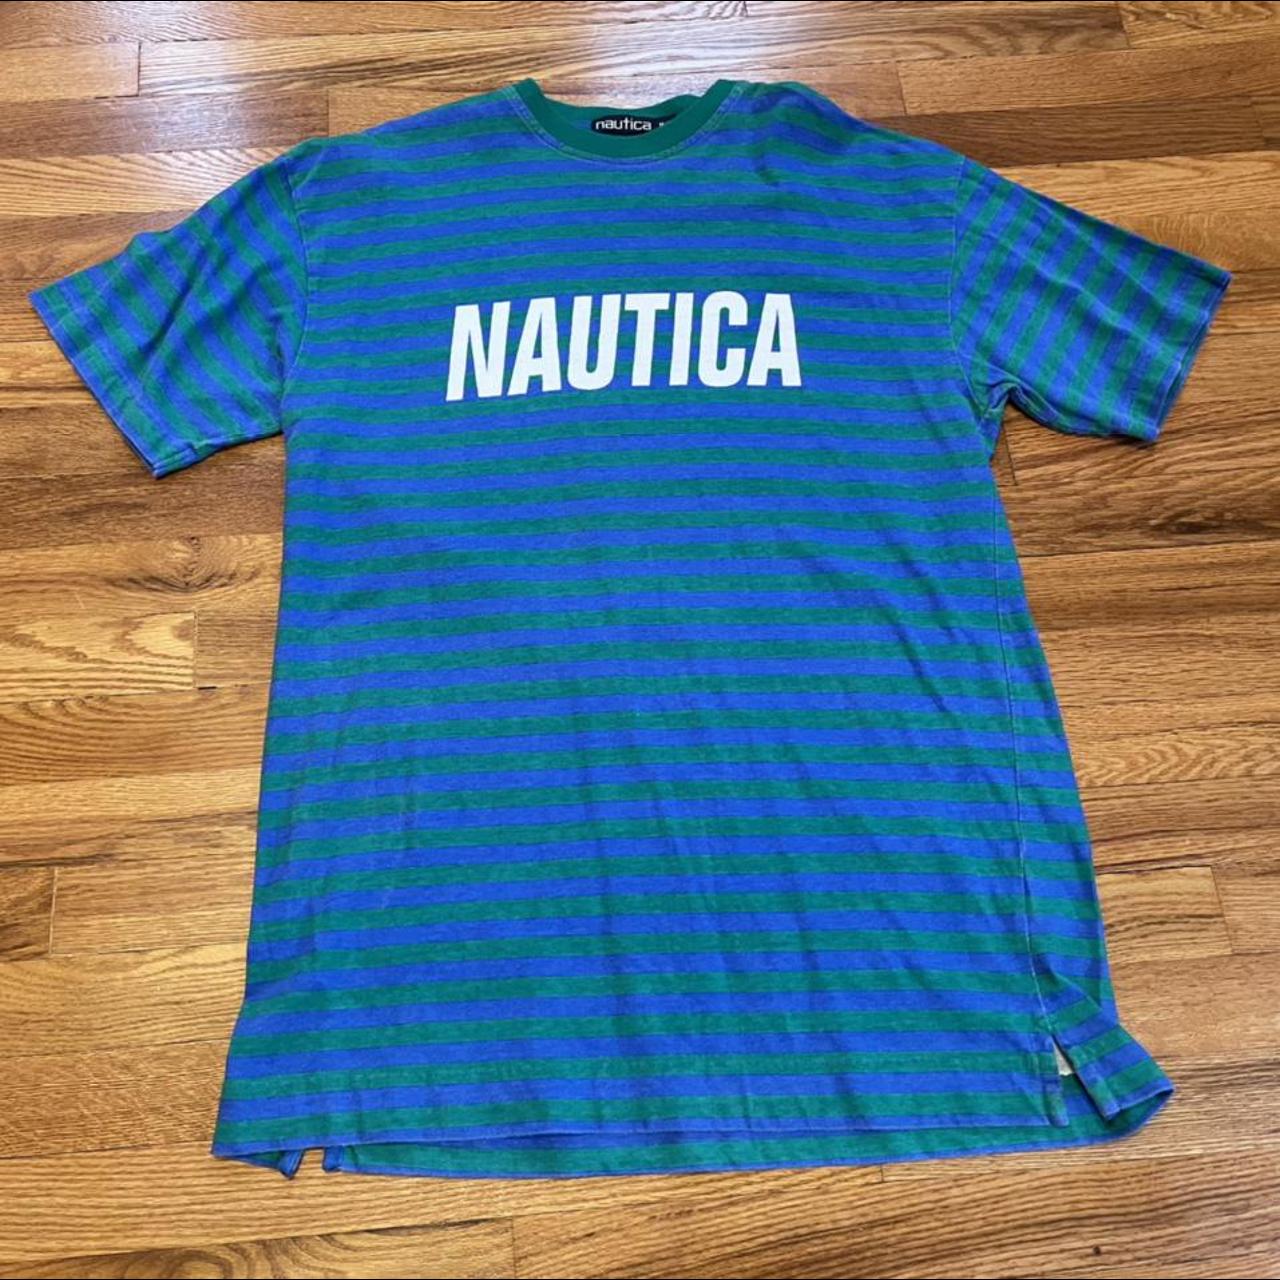 90s Nautica striped vintage t-shirt rare awesome... Depop